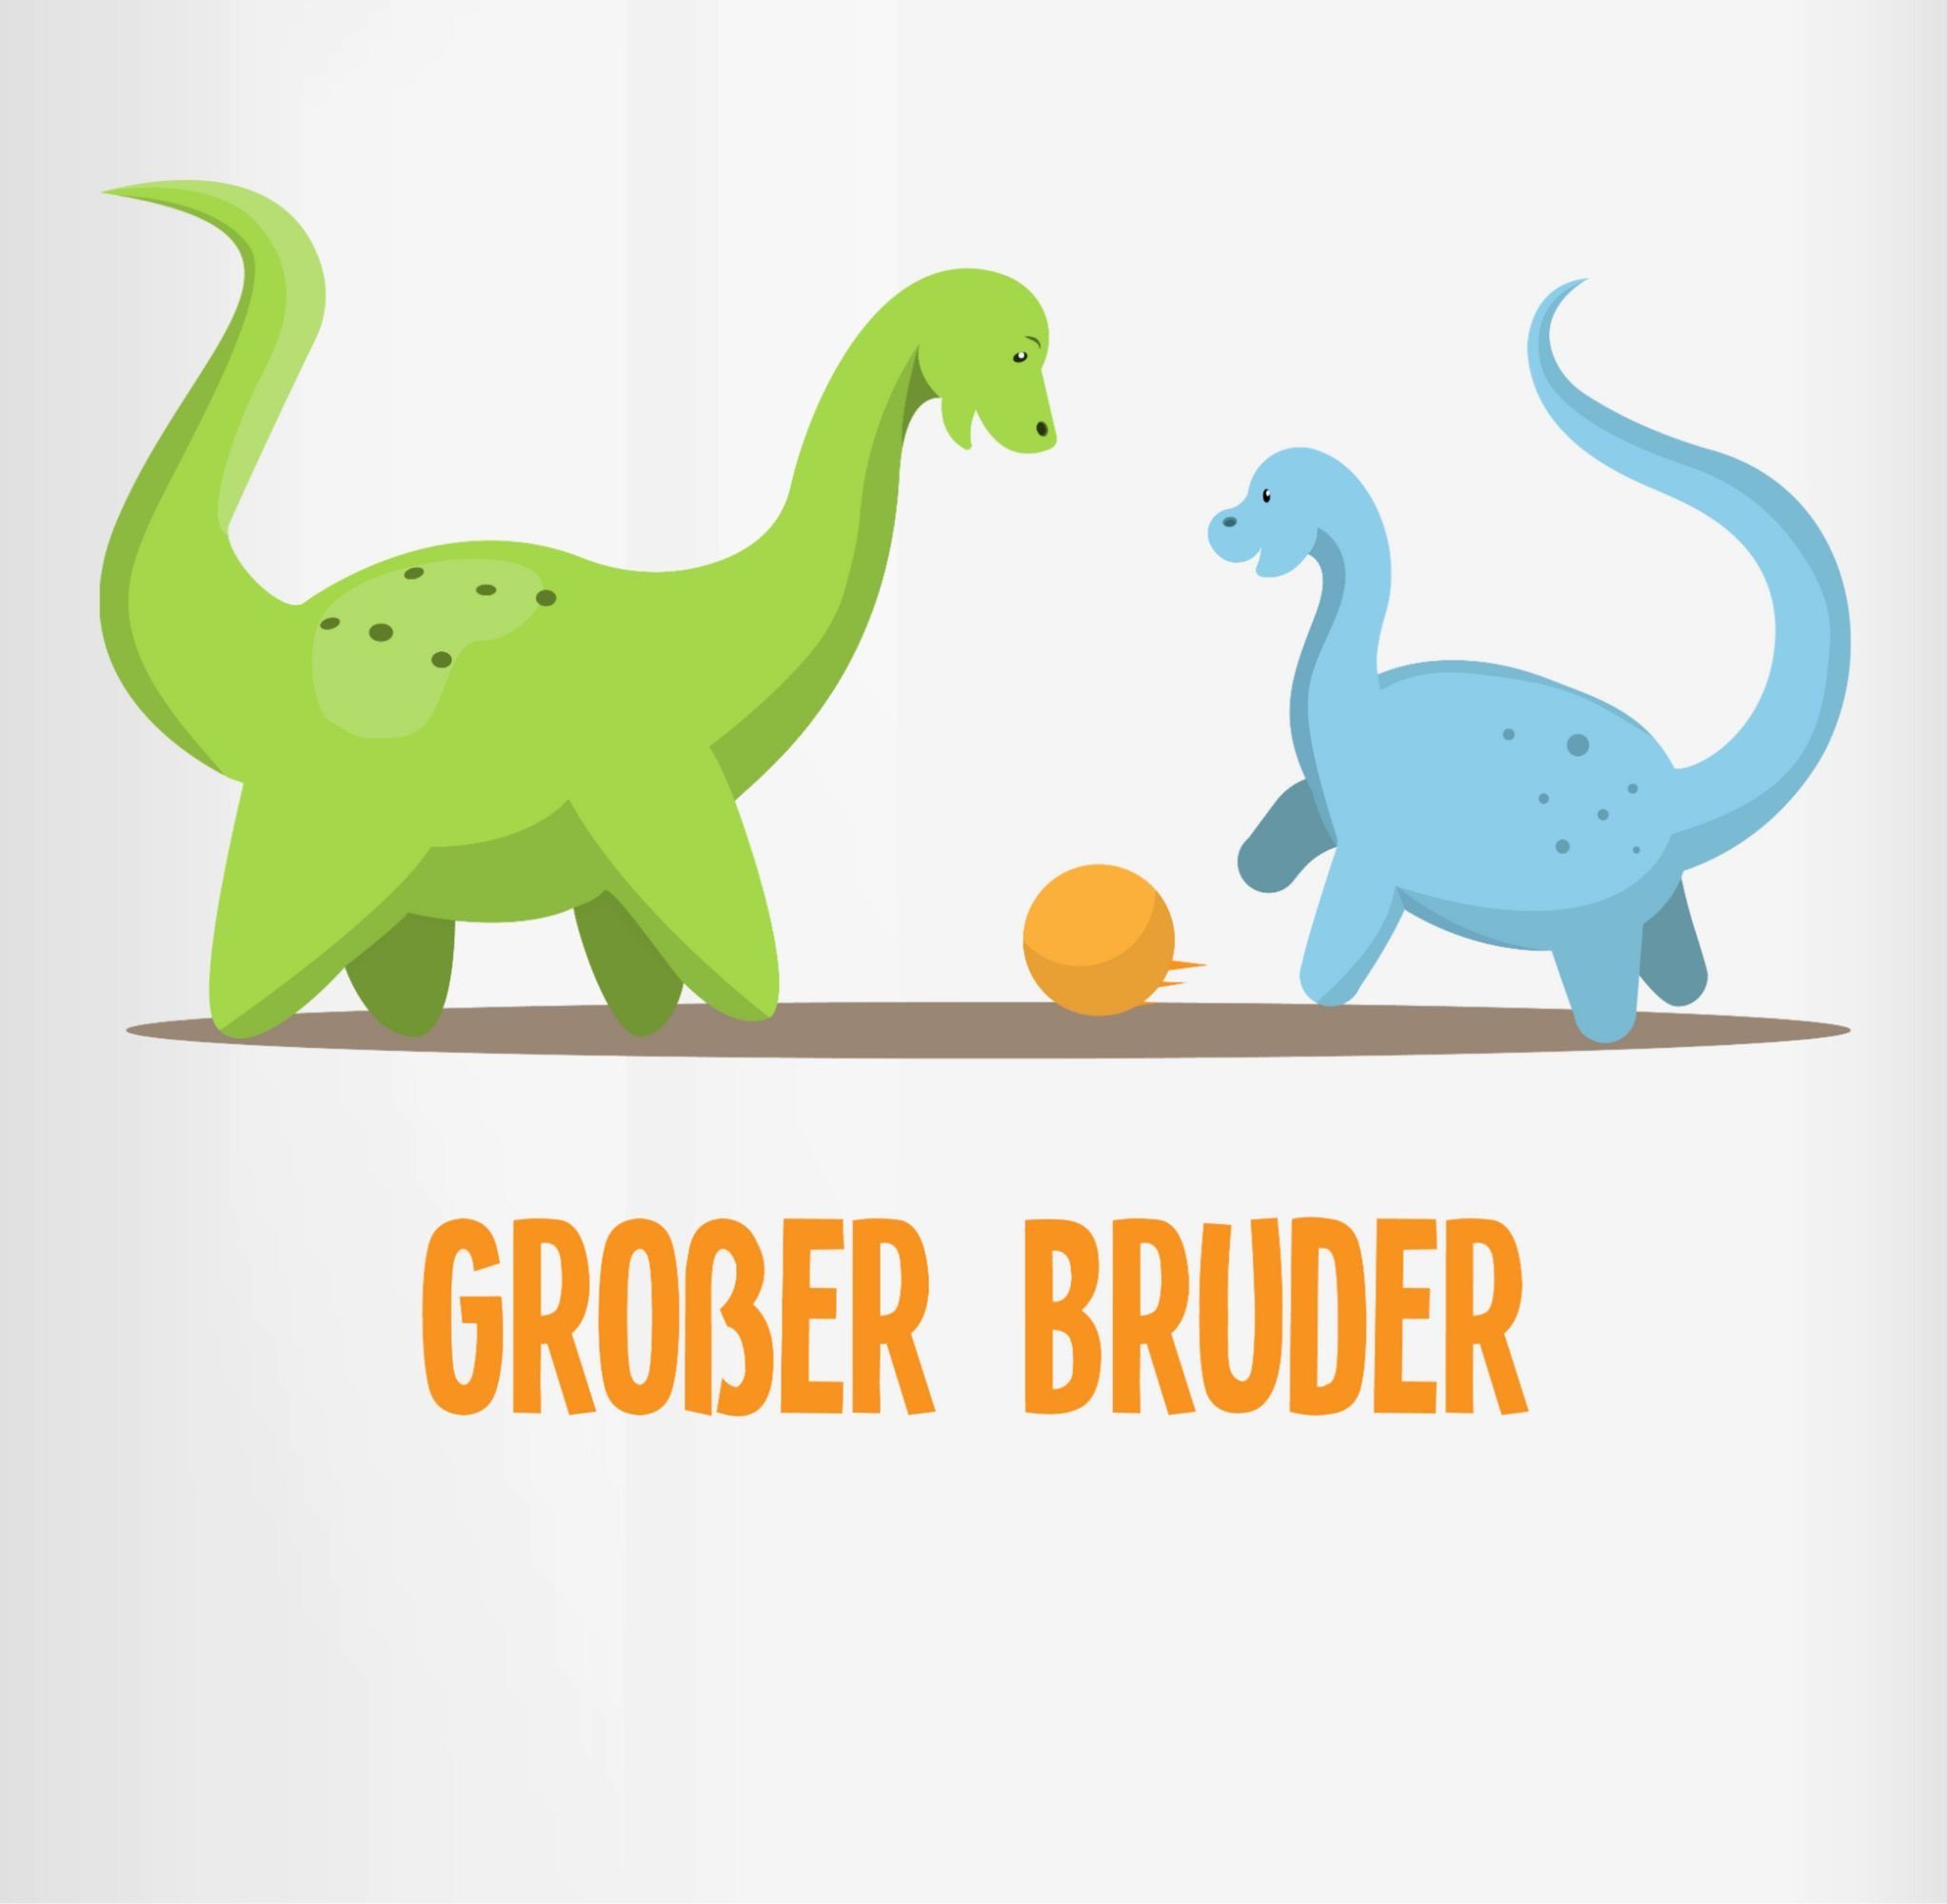 Shirtracer Tasse Großer Bruder Dinosaurier, Keramik, 3 Hellblau Bruder Großer